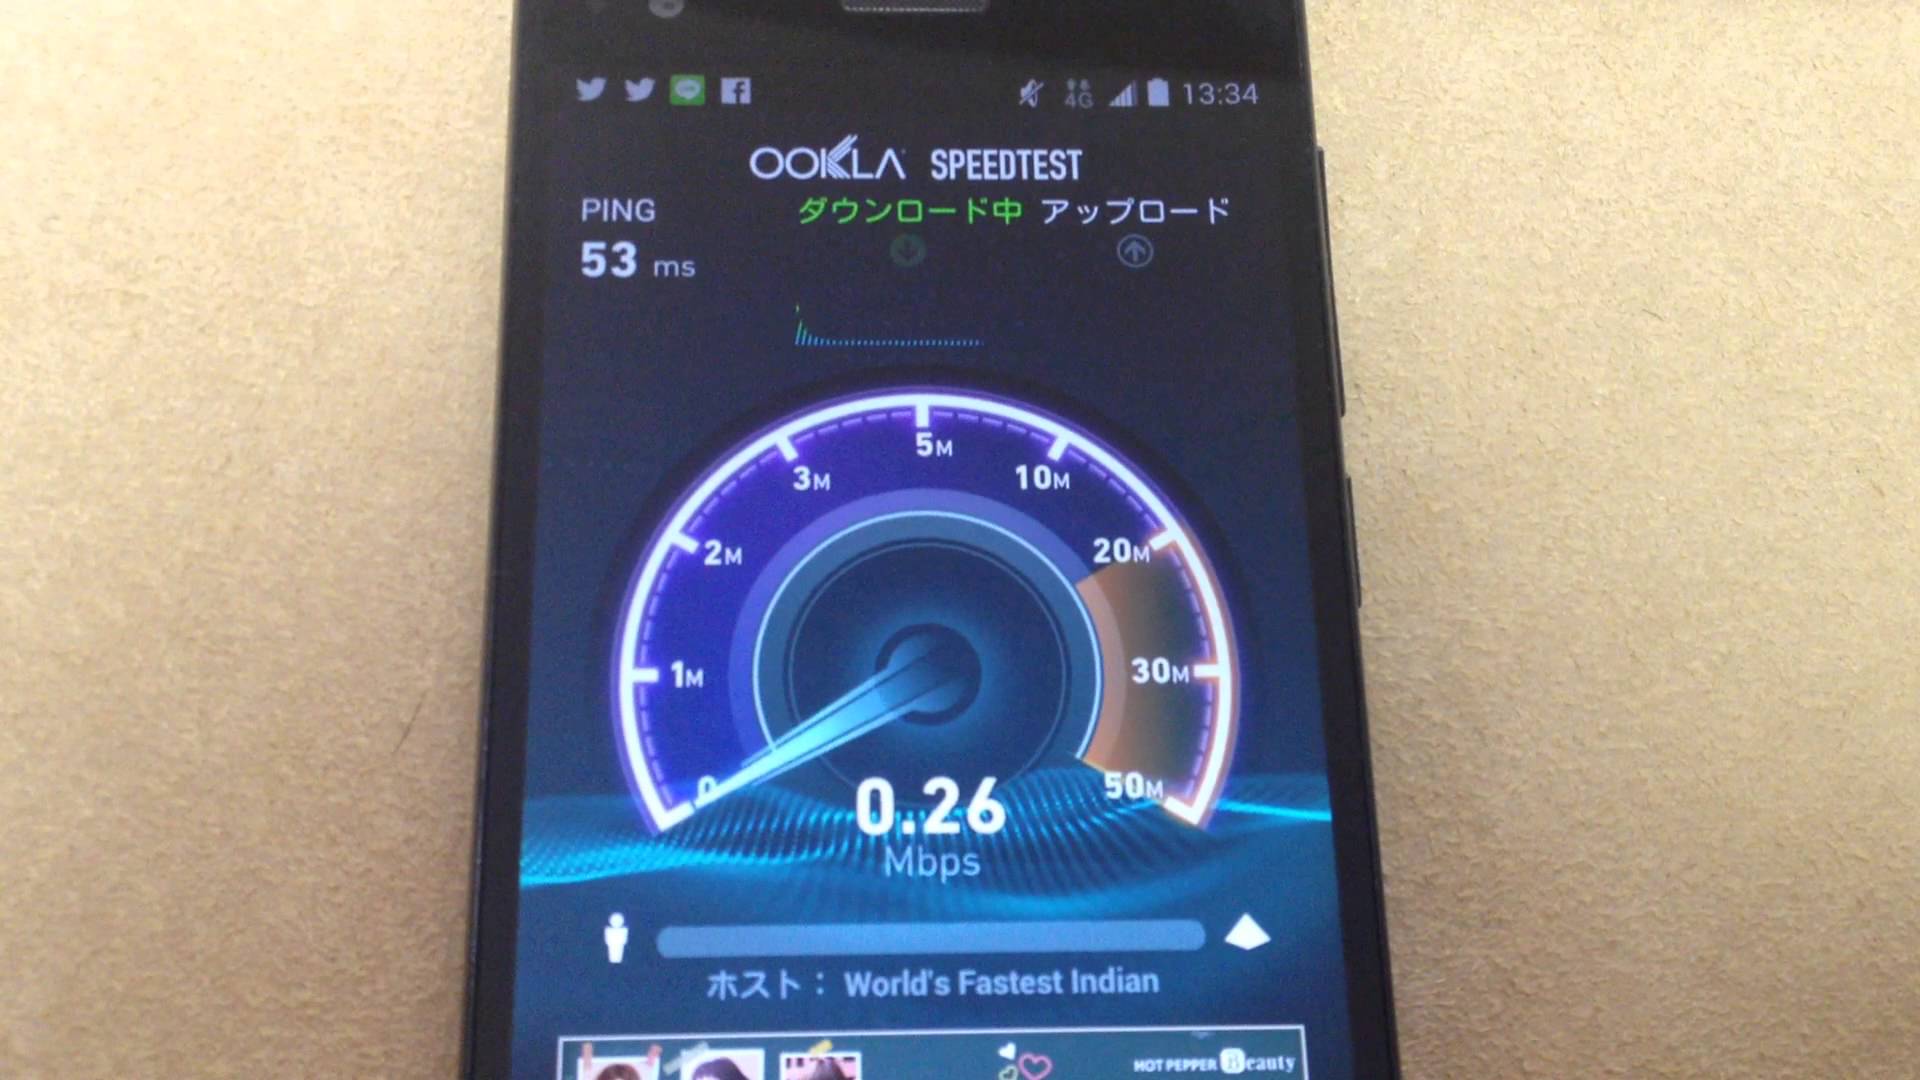 BIGLOBE LTE・3G 通信速度制限時 計測1